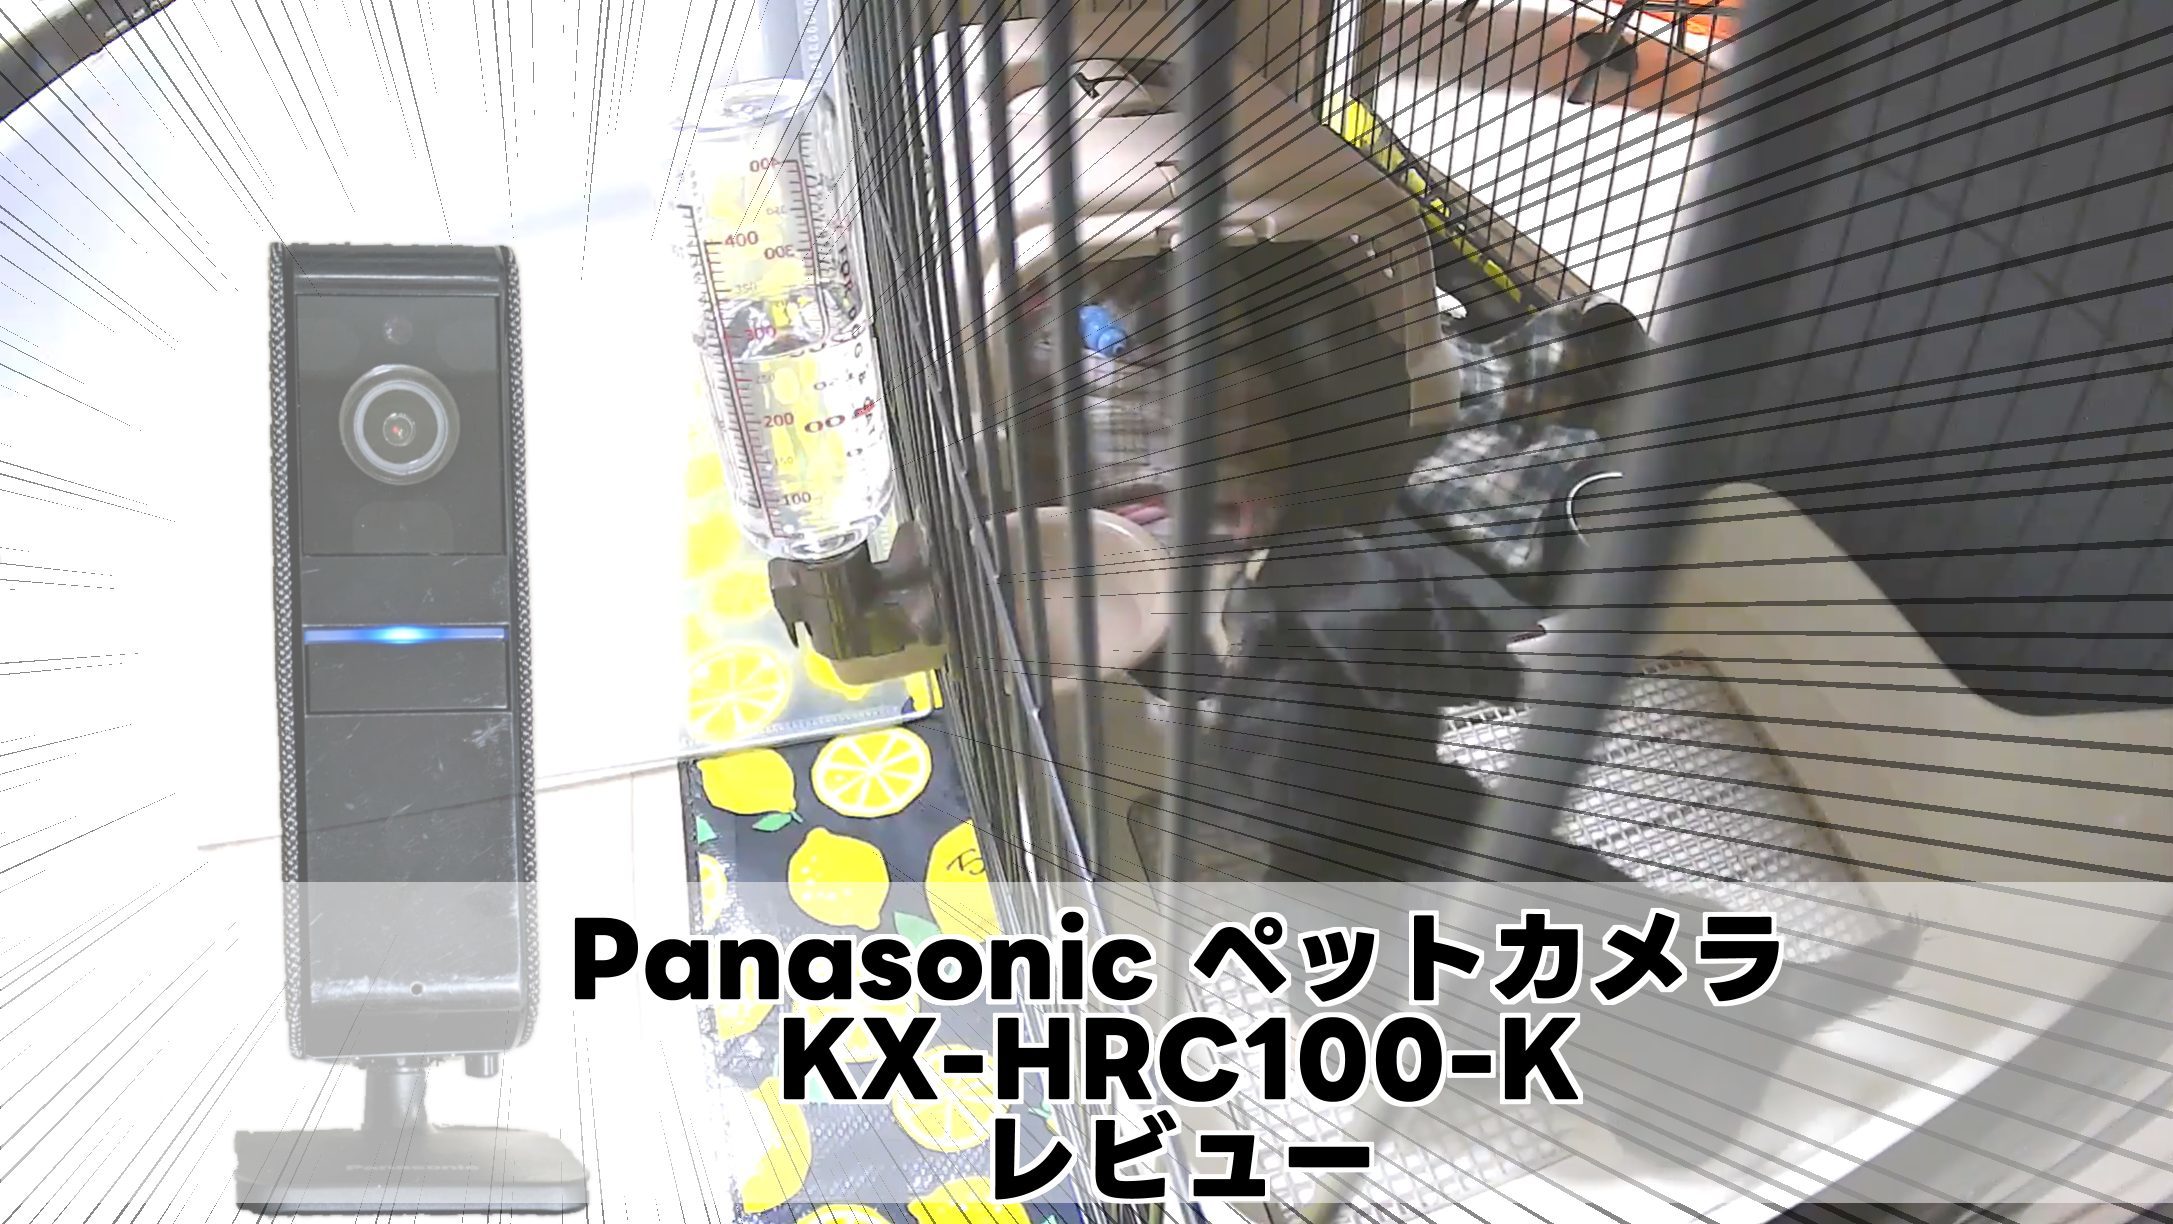 Panasonic ペットカメラKX-HRC100-Kをレビュー！愛犬と2年以上使用した 